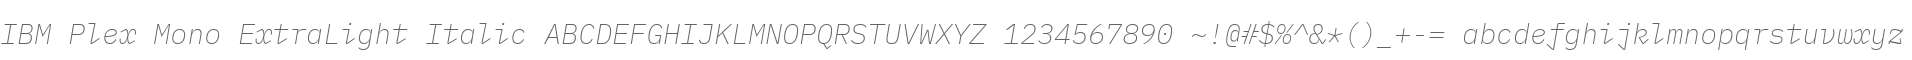 IBM Plex Mono ExtraLight Italic